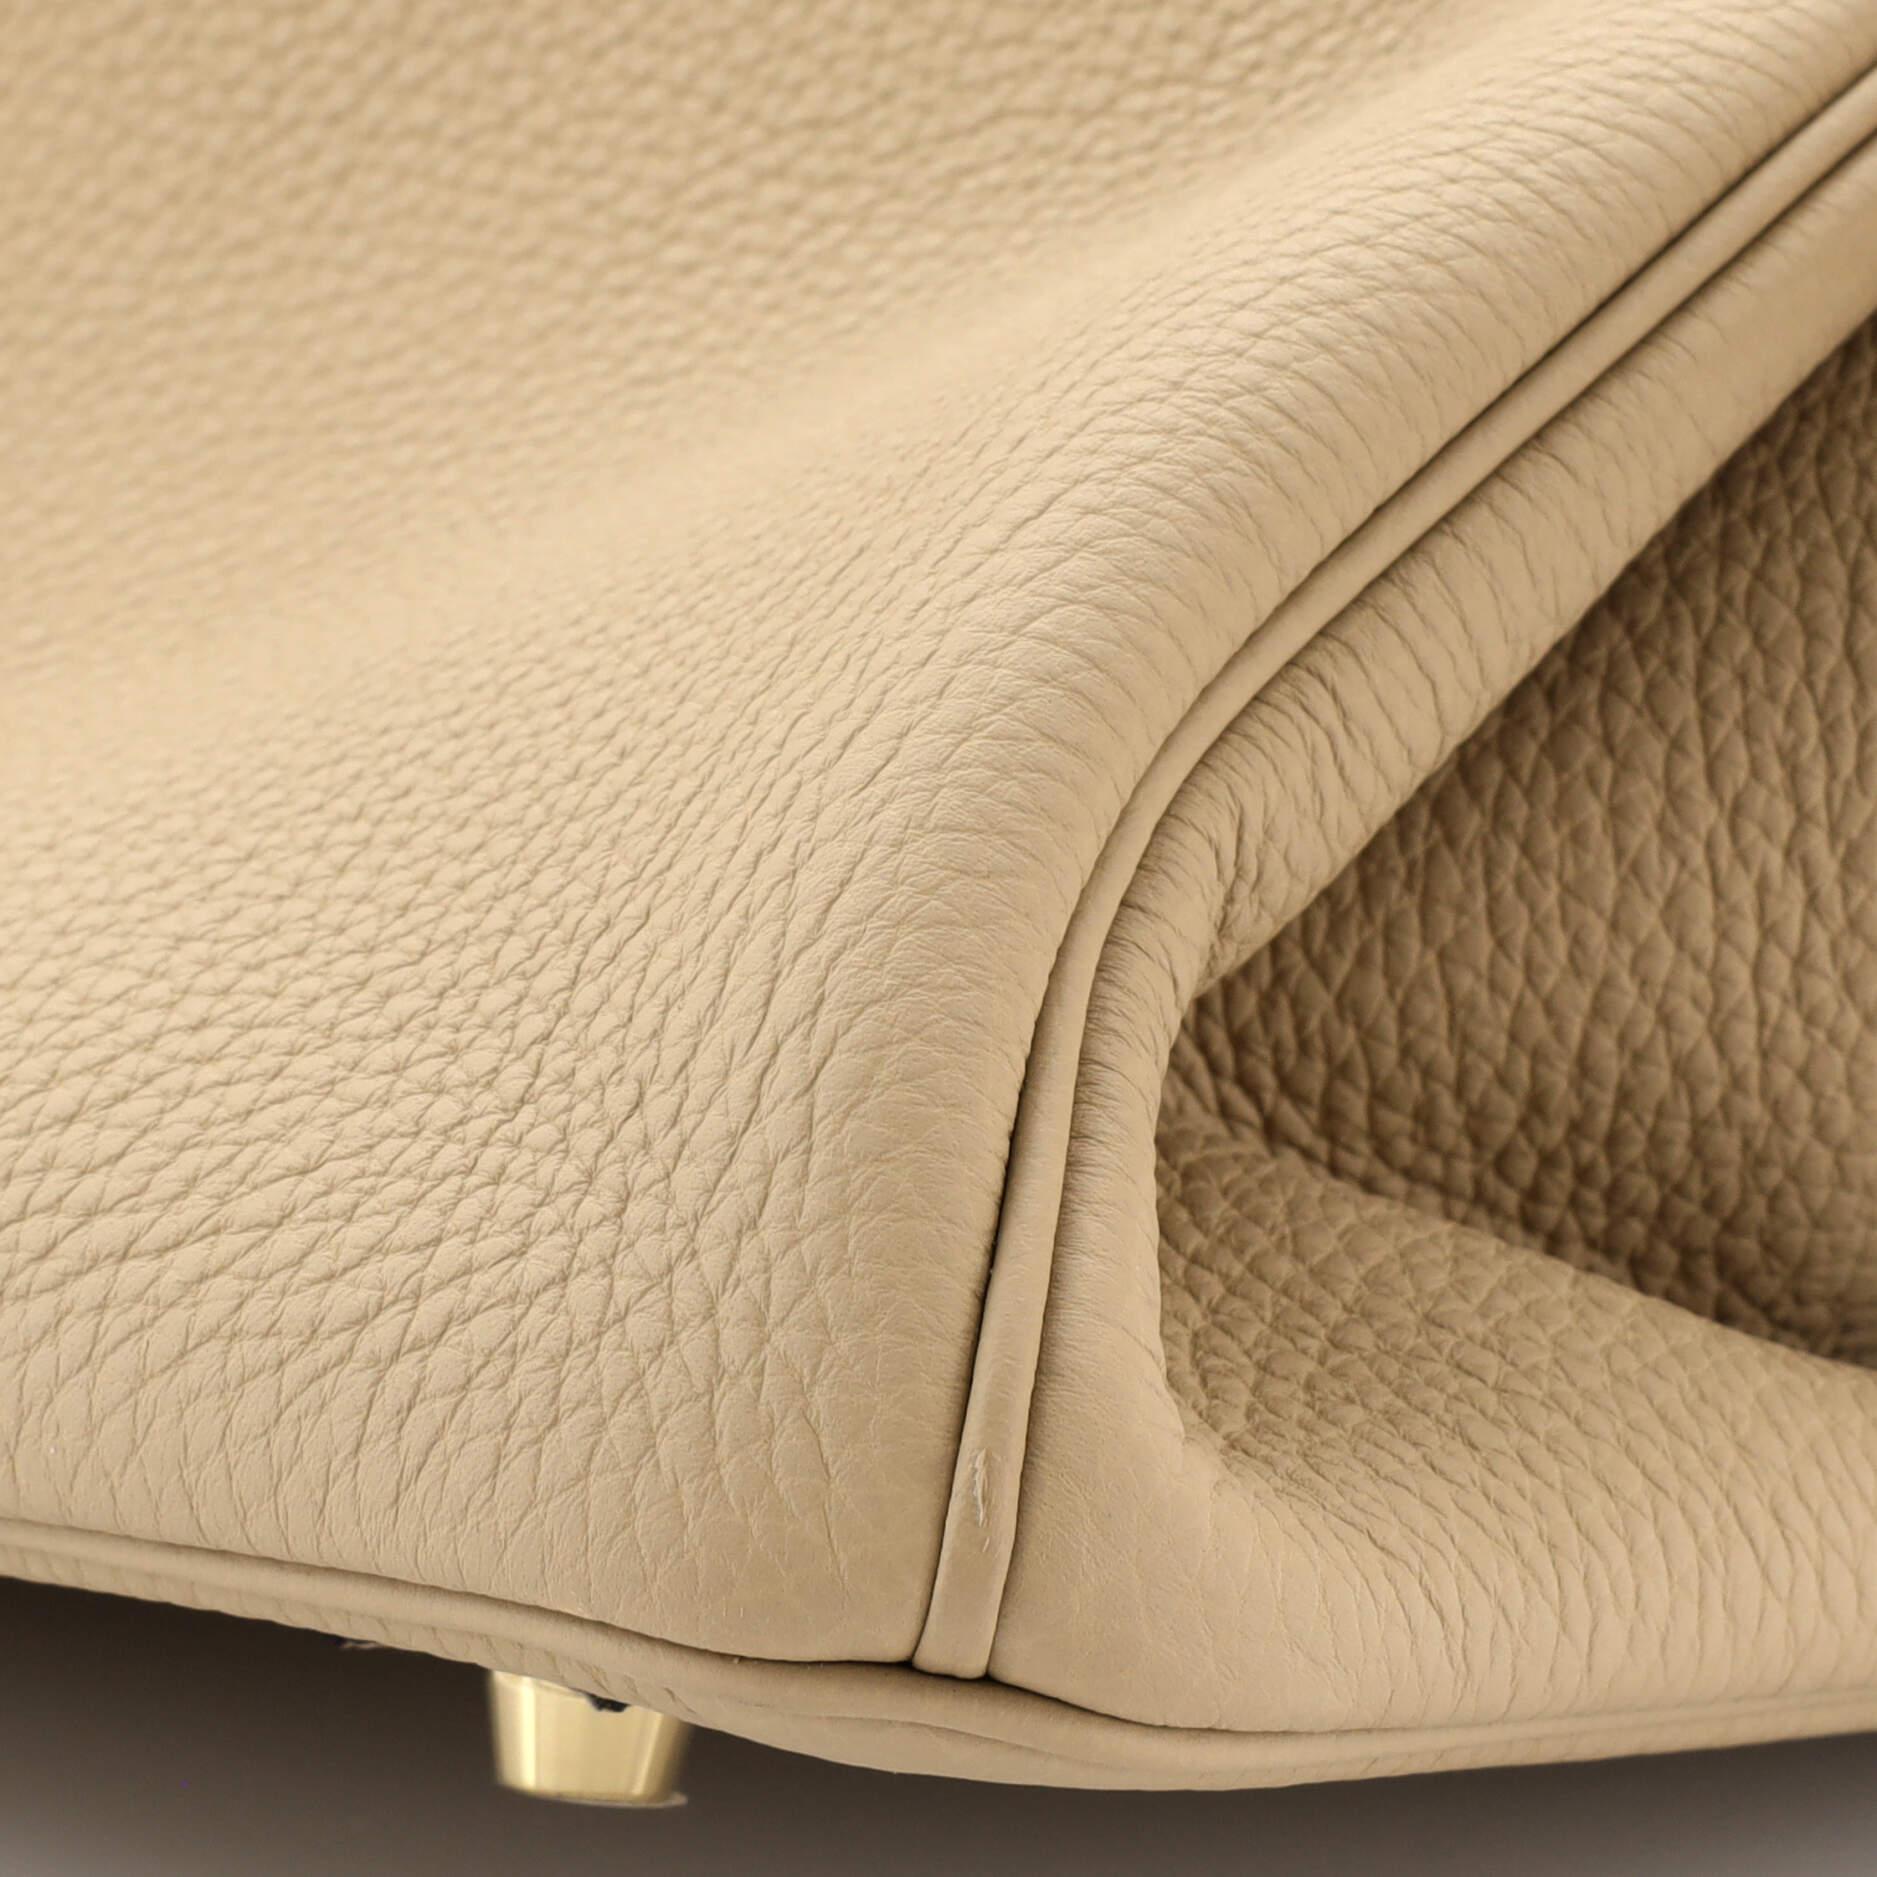 Hermes Birkin Handbag Light Togo with Gold Hardware 35 4